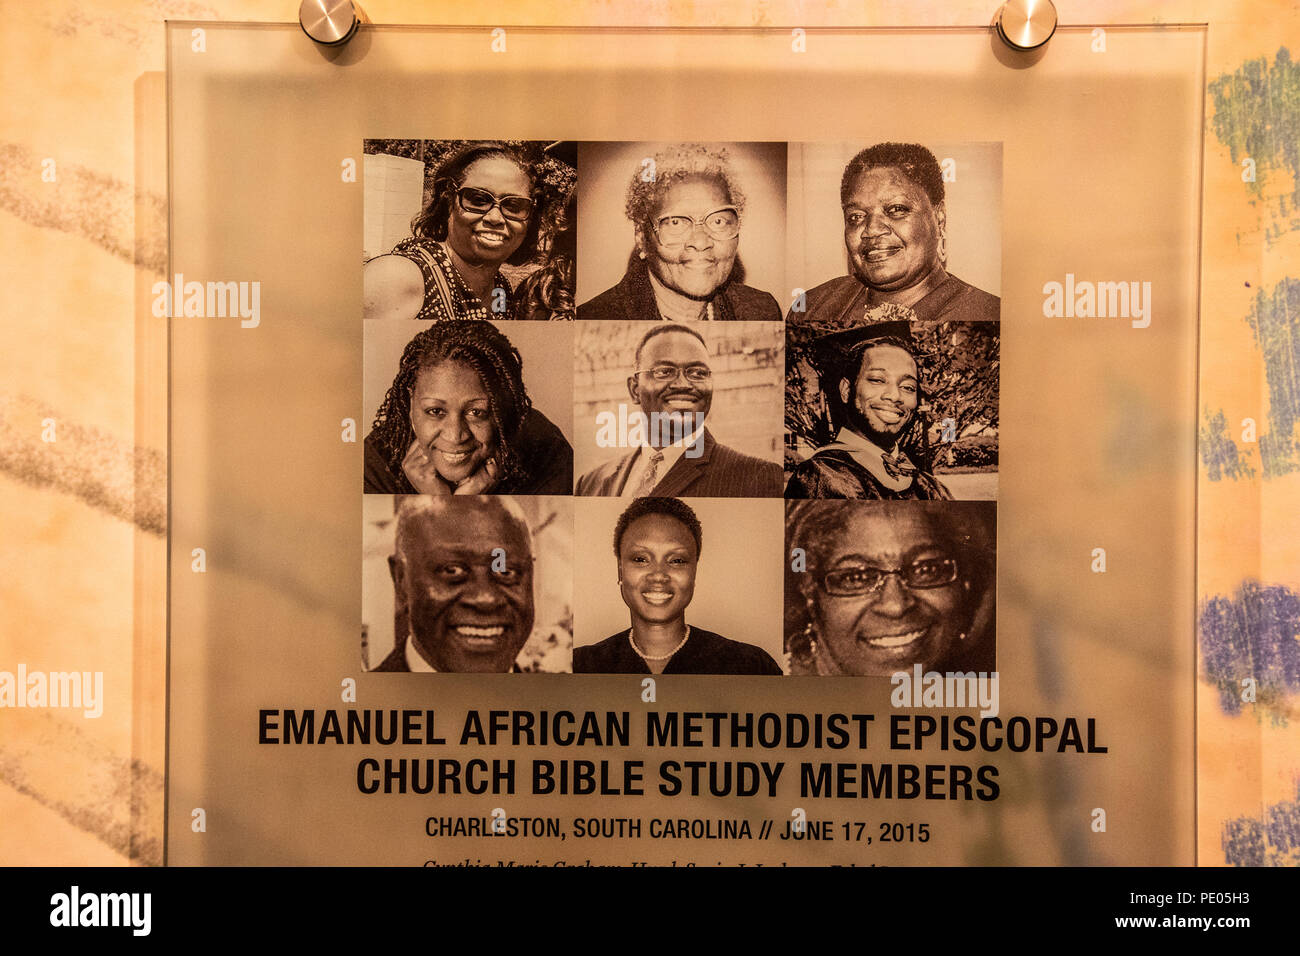 Emanuel African Methodist Episcopal Church Bible Study Members Memorial Plaque dans, Civil Rights Memorial Centre, Montgomery, Alabama, États-Unis Banque D'Images